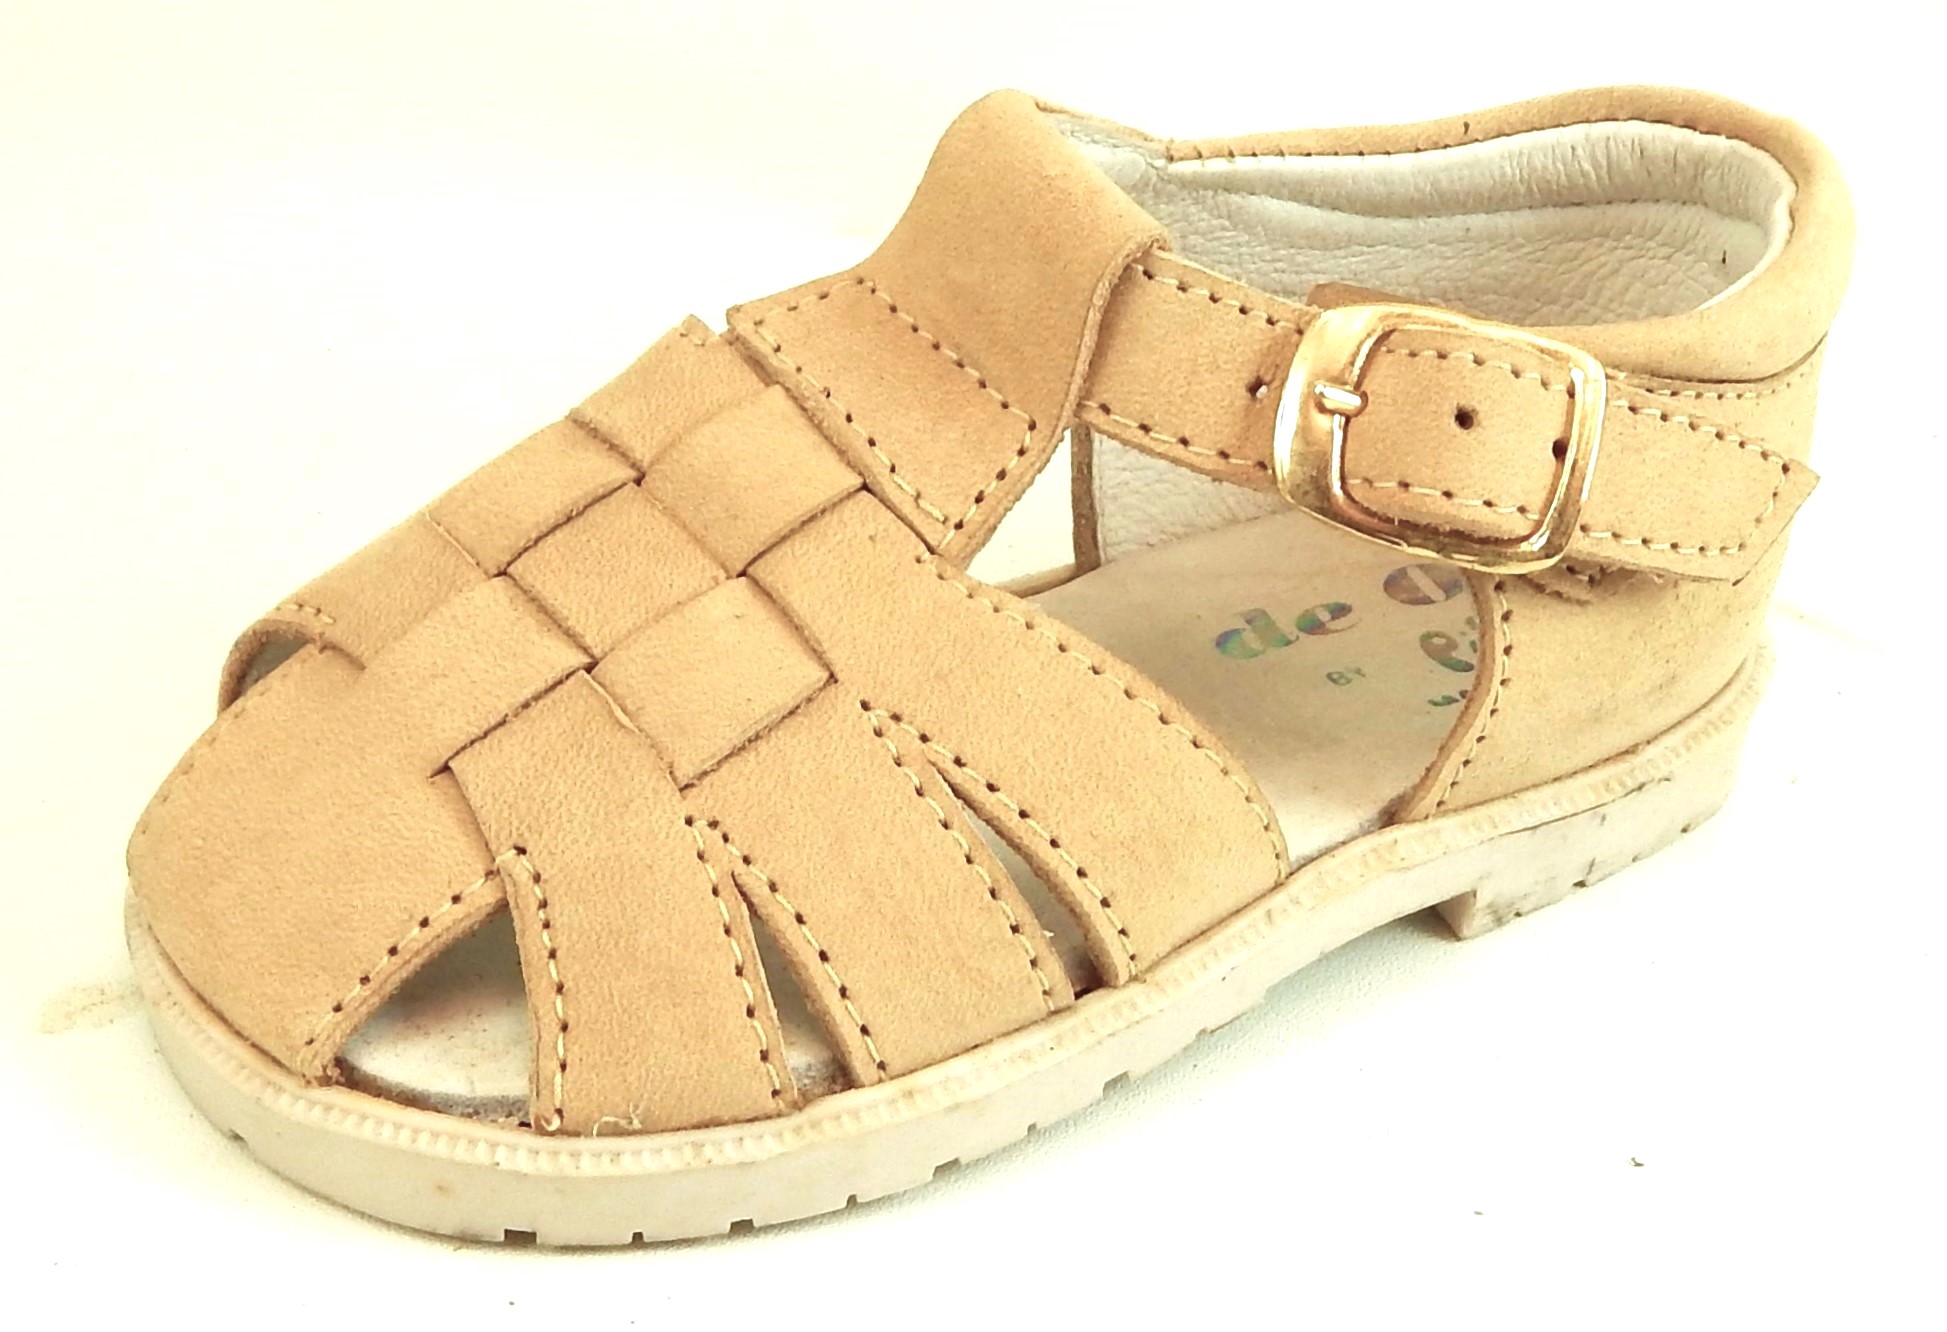 A-8020 - Sand Nubuck Sandals - Euro 19 Size 4